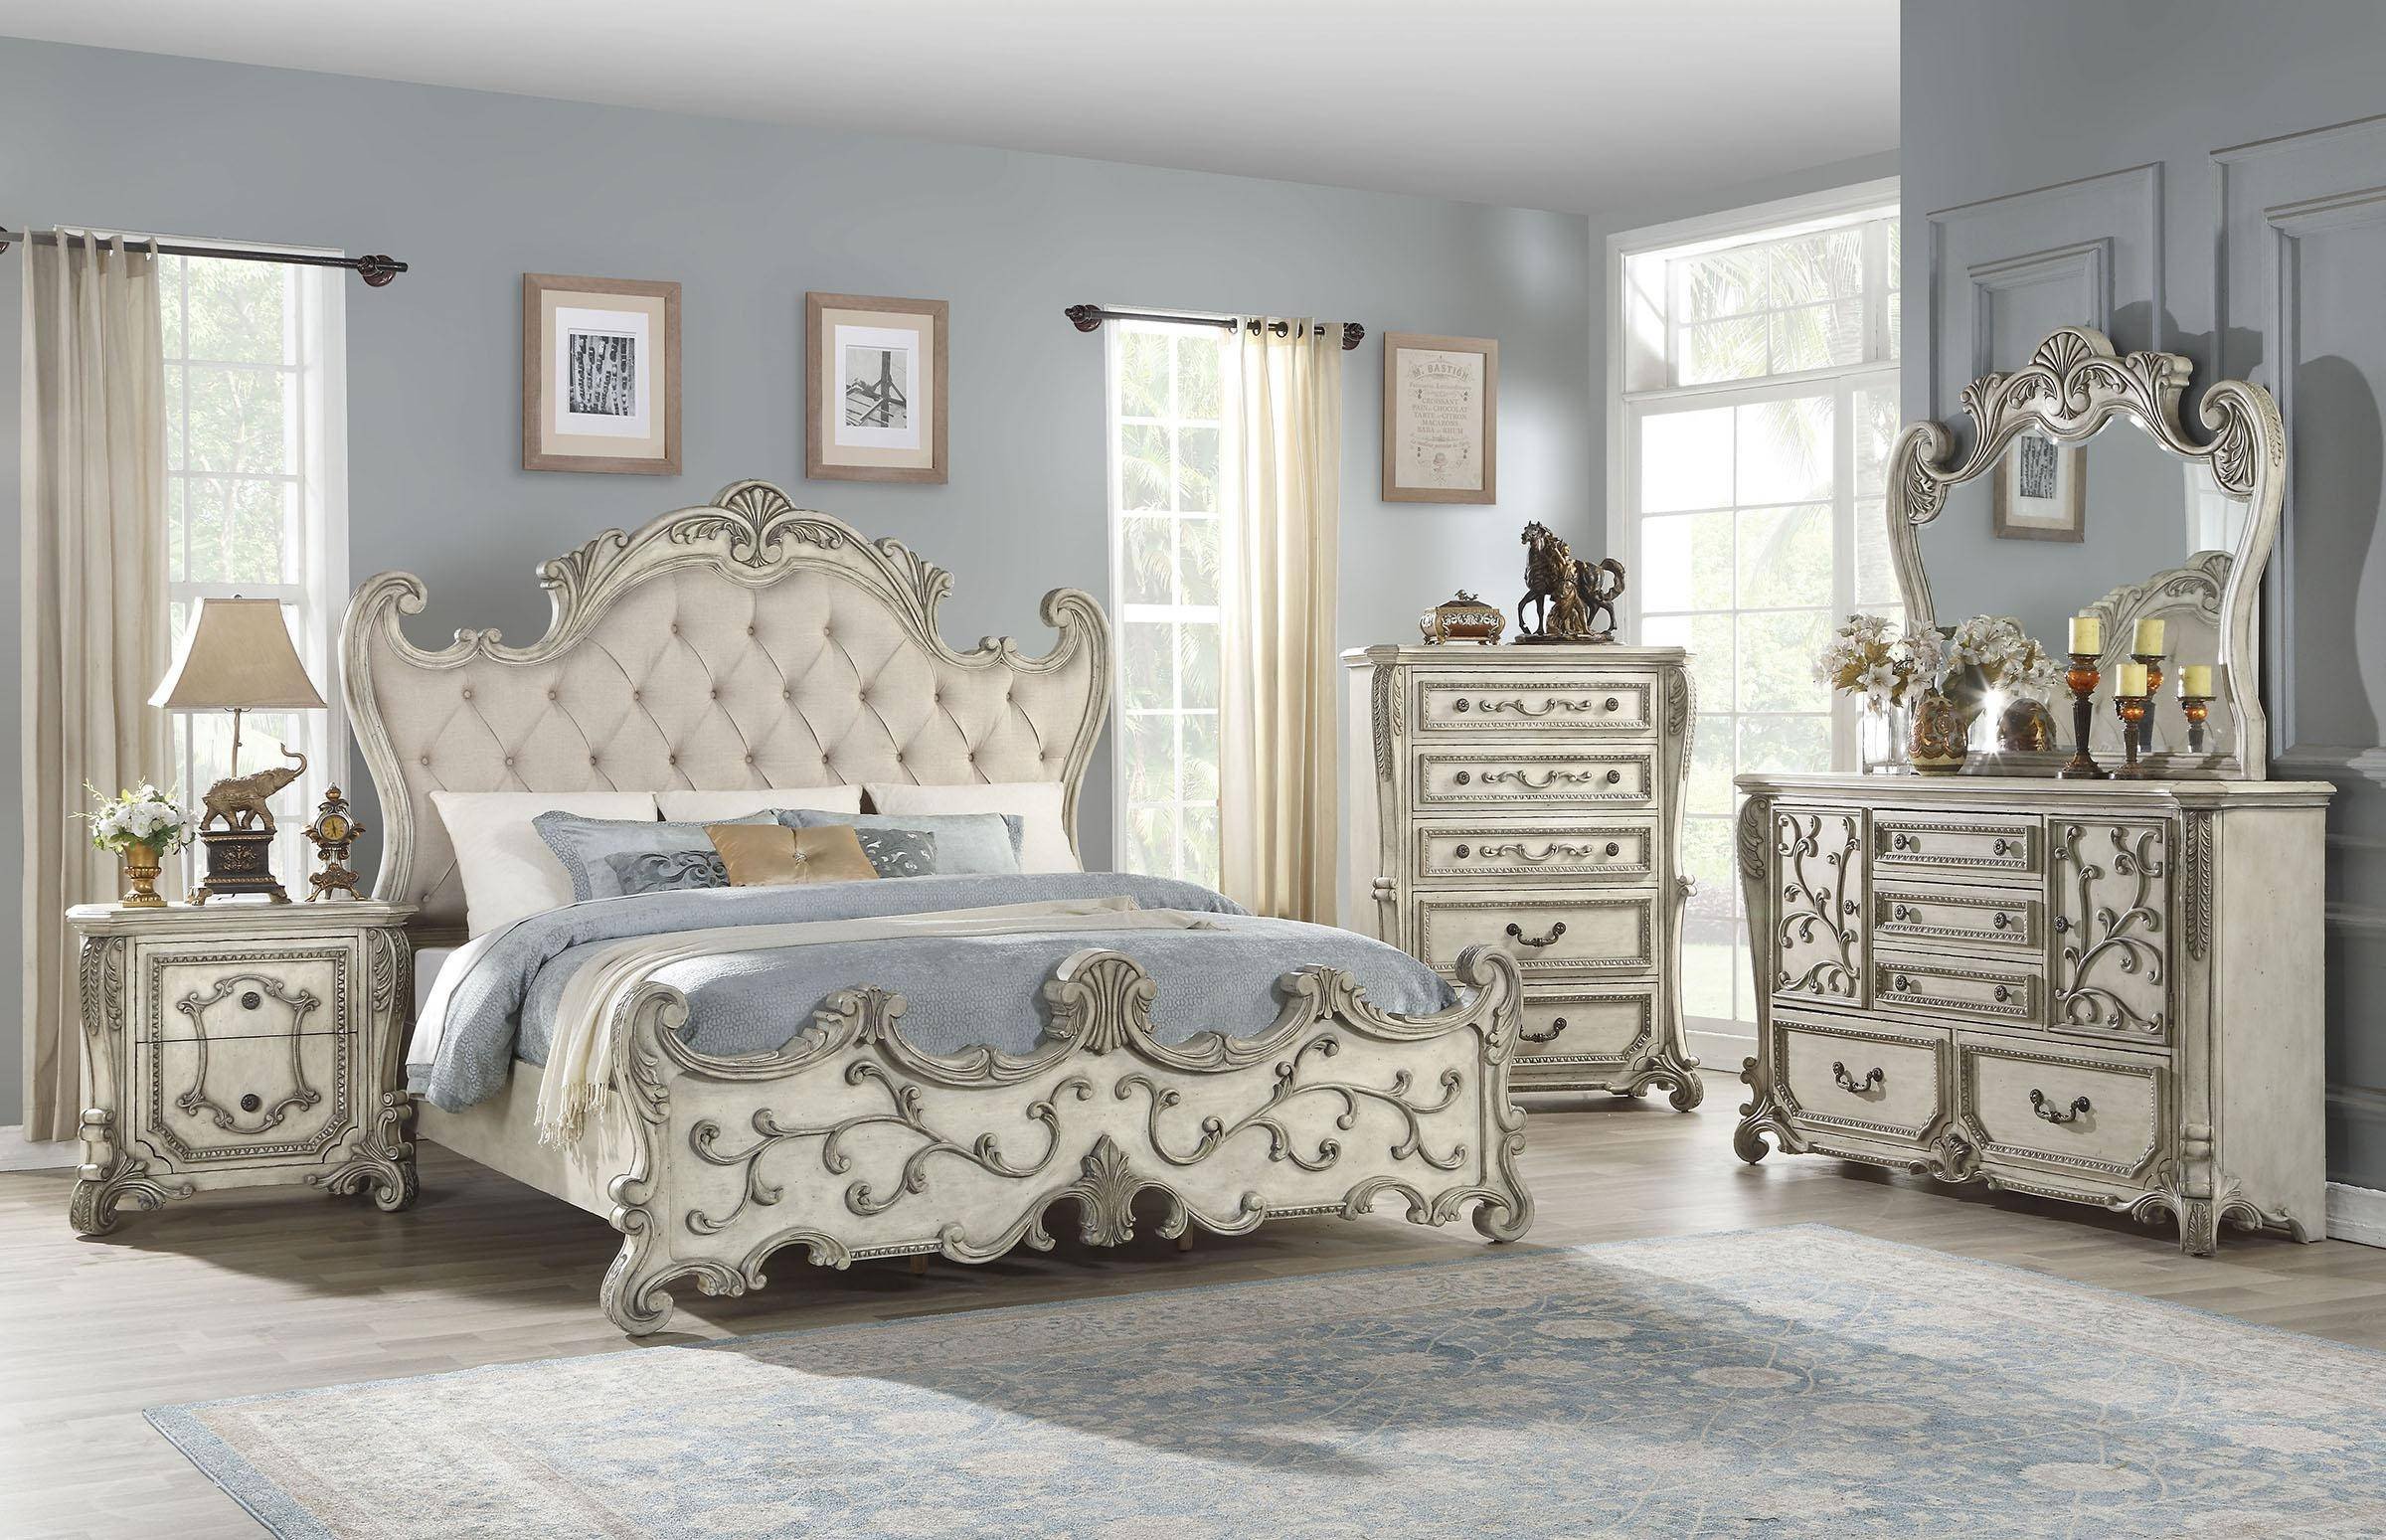 Luxury King Bedroom Set Best Of Luxury King Bedroom Set 5p W Chest Antique White Fabric